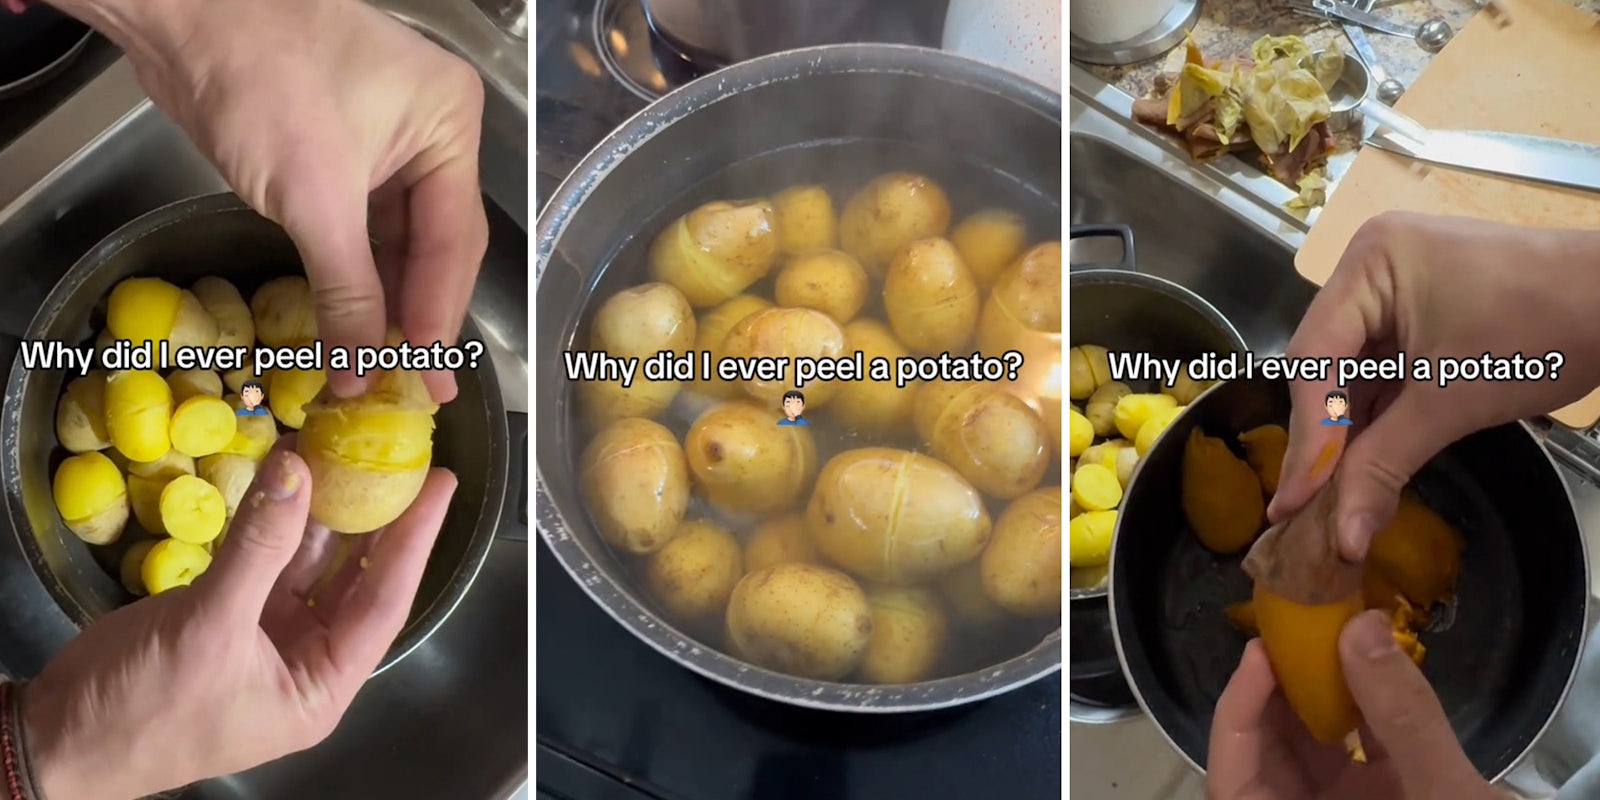 Woman shares hack for easy potato peeling